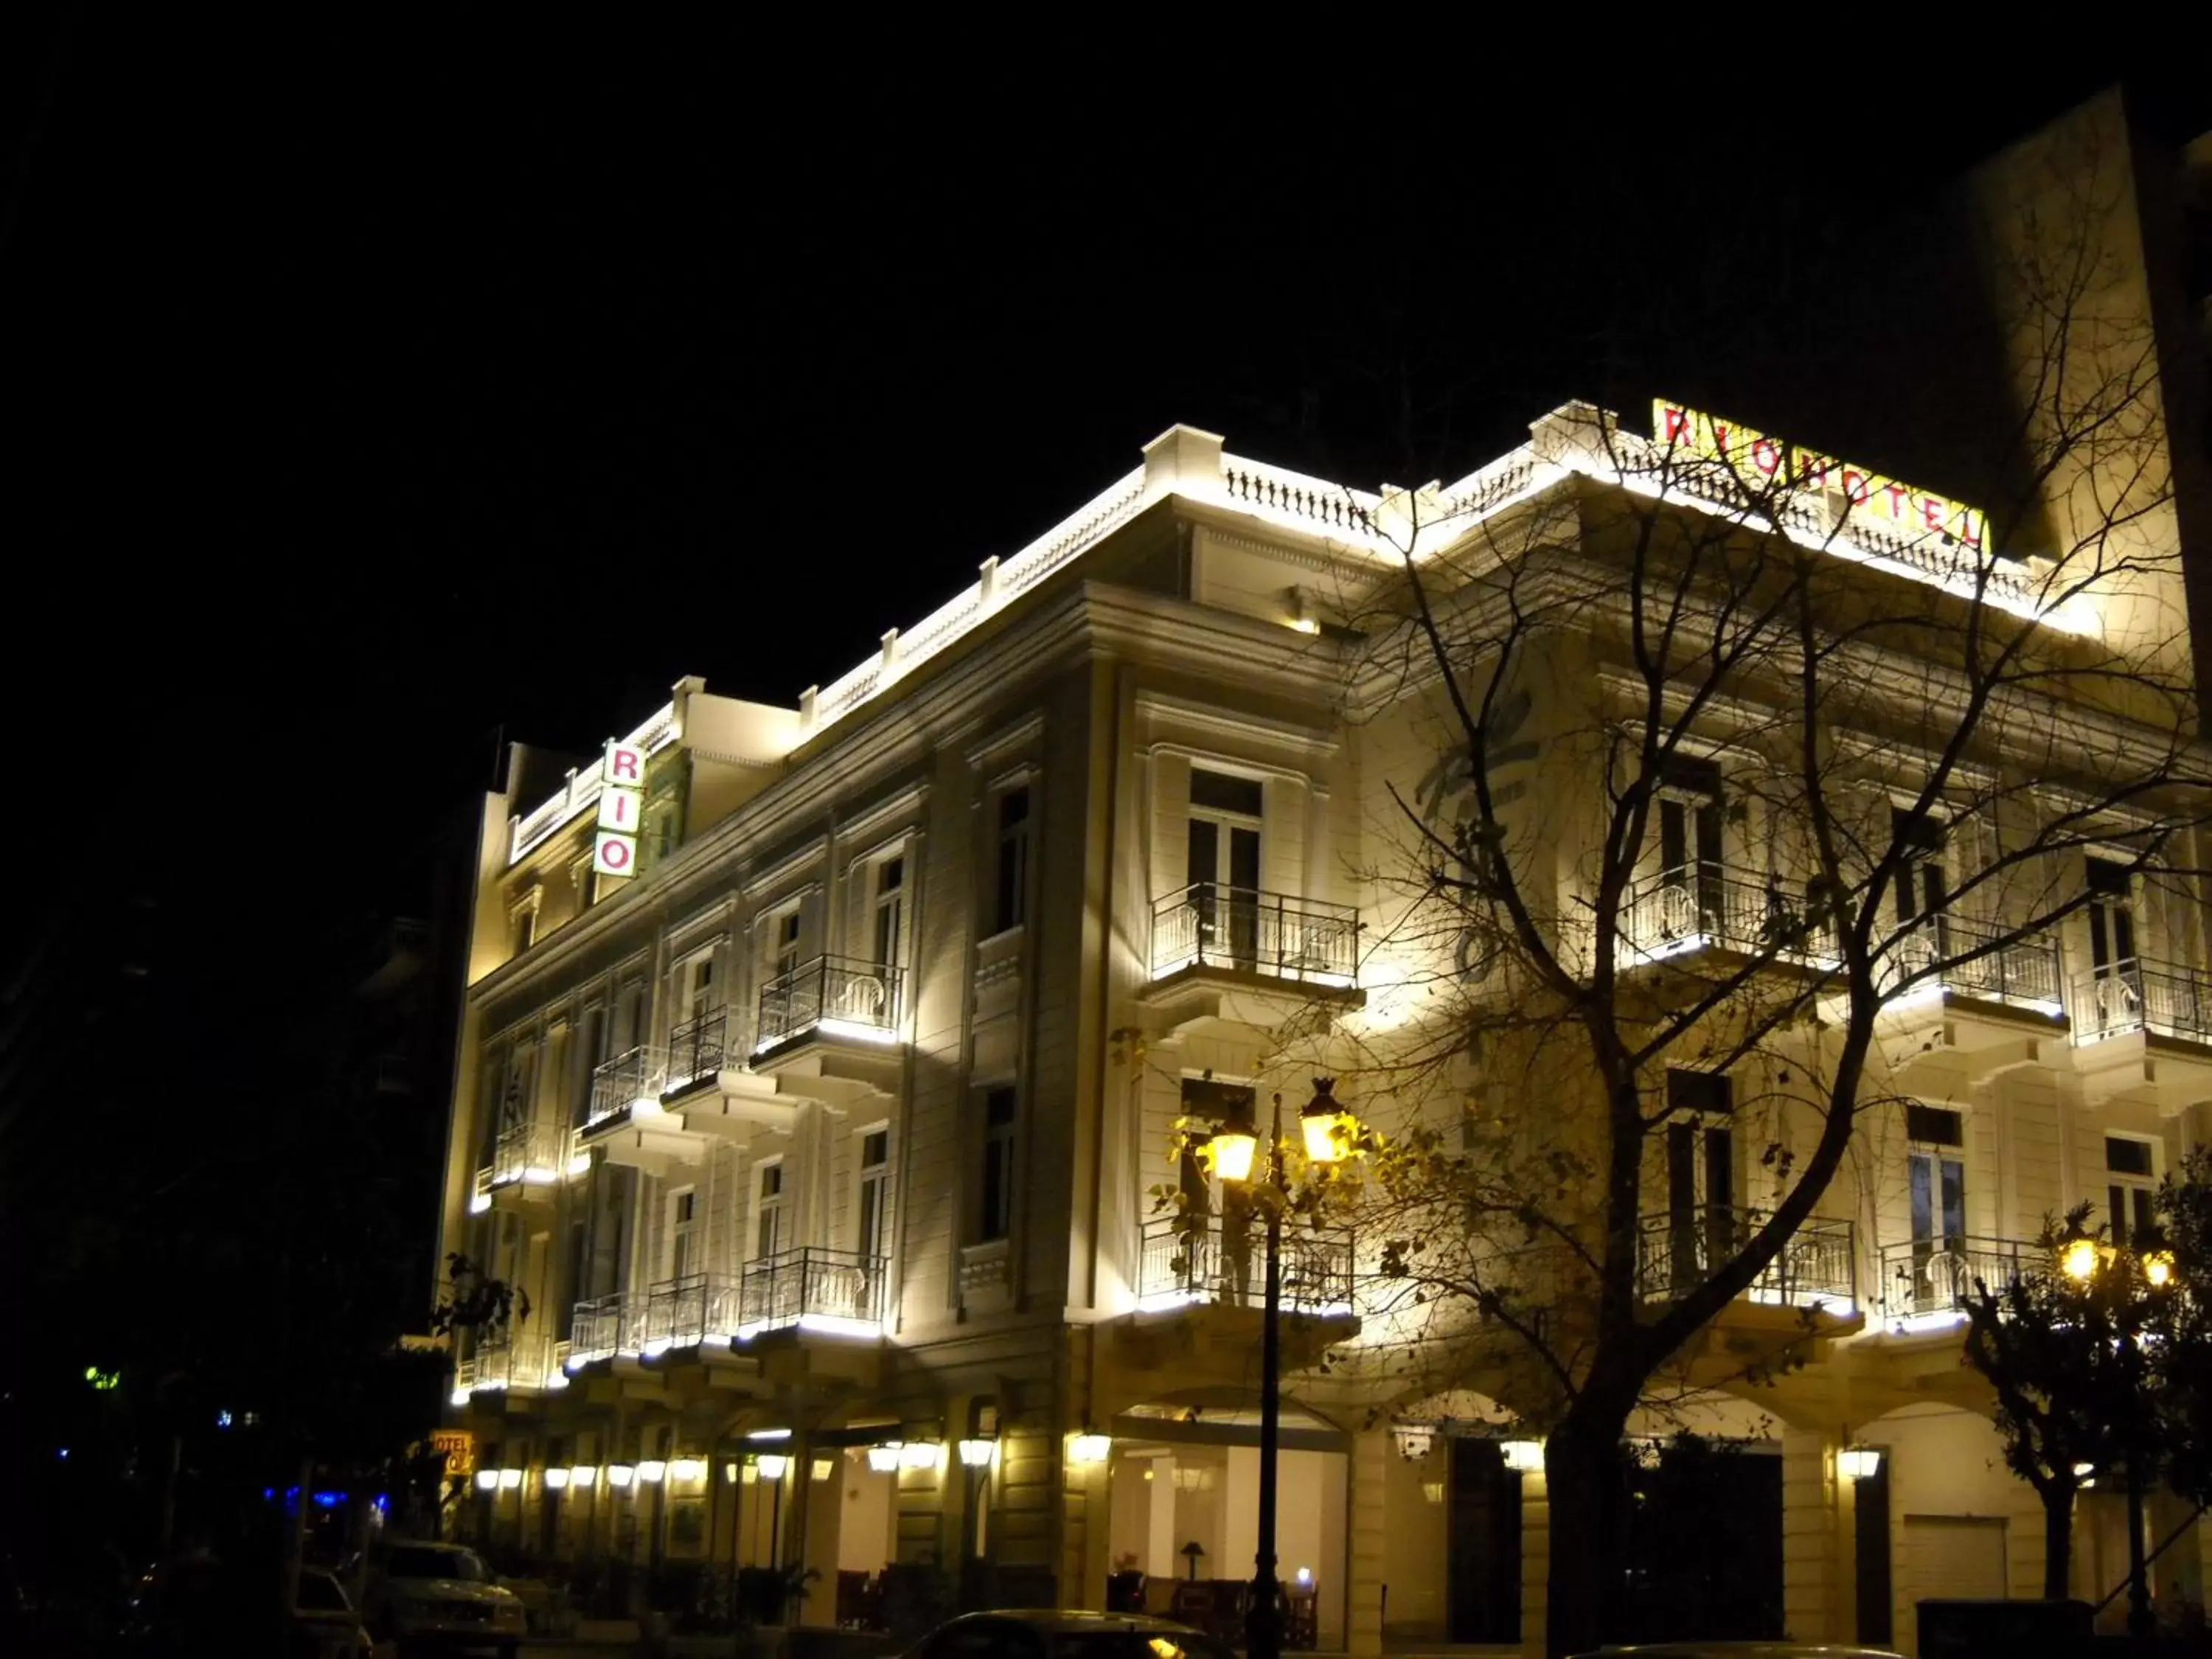 Facade/entrance, Property Building in Hotel Rio Athens